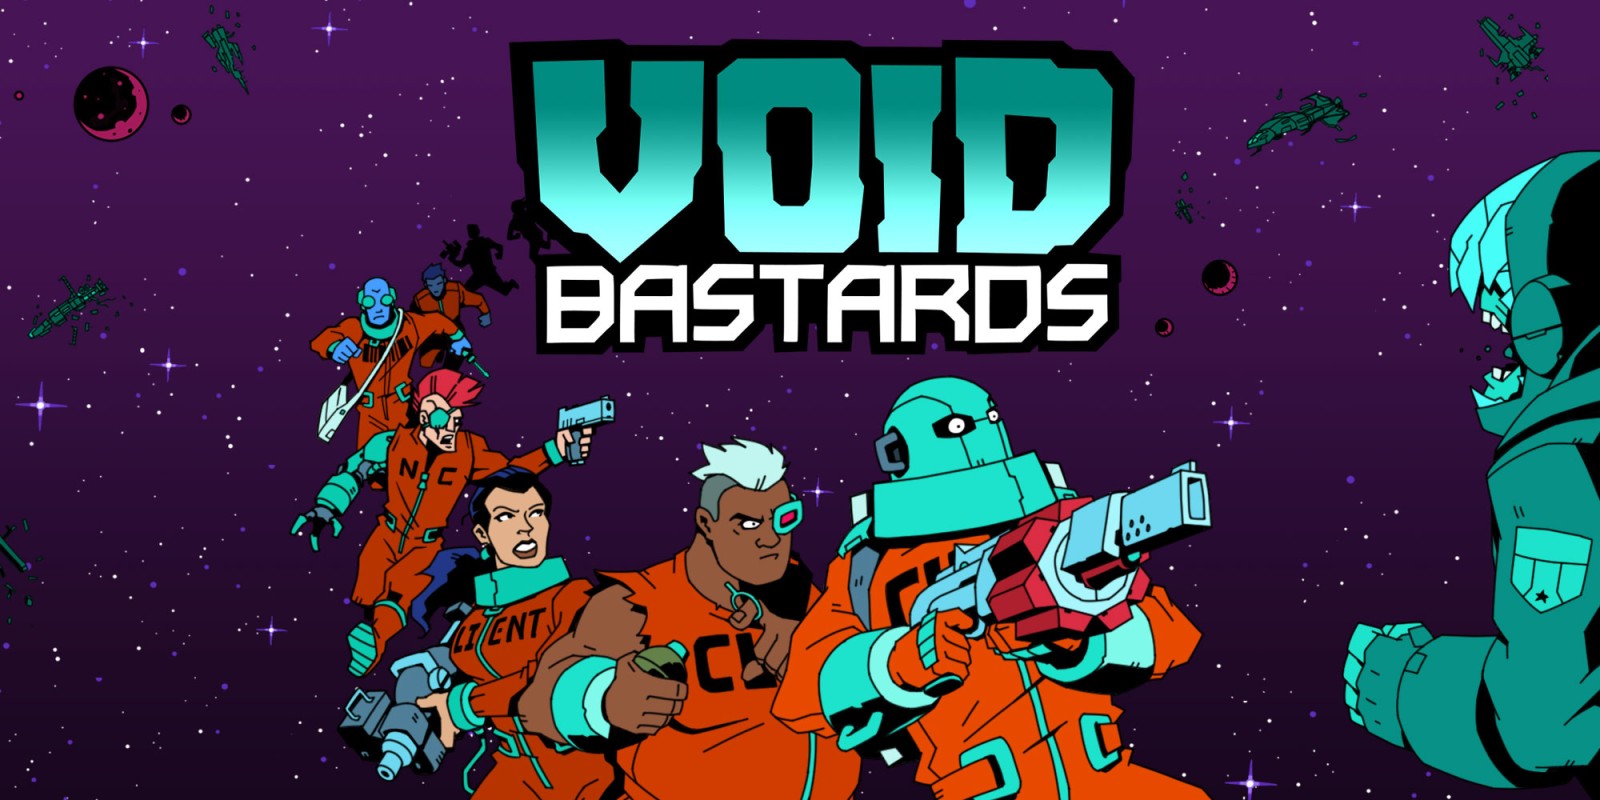 void bastards enemies